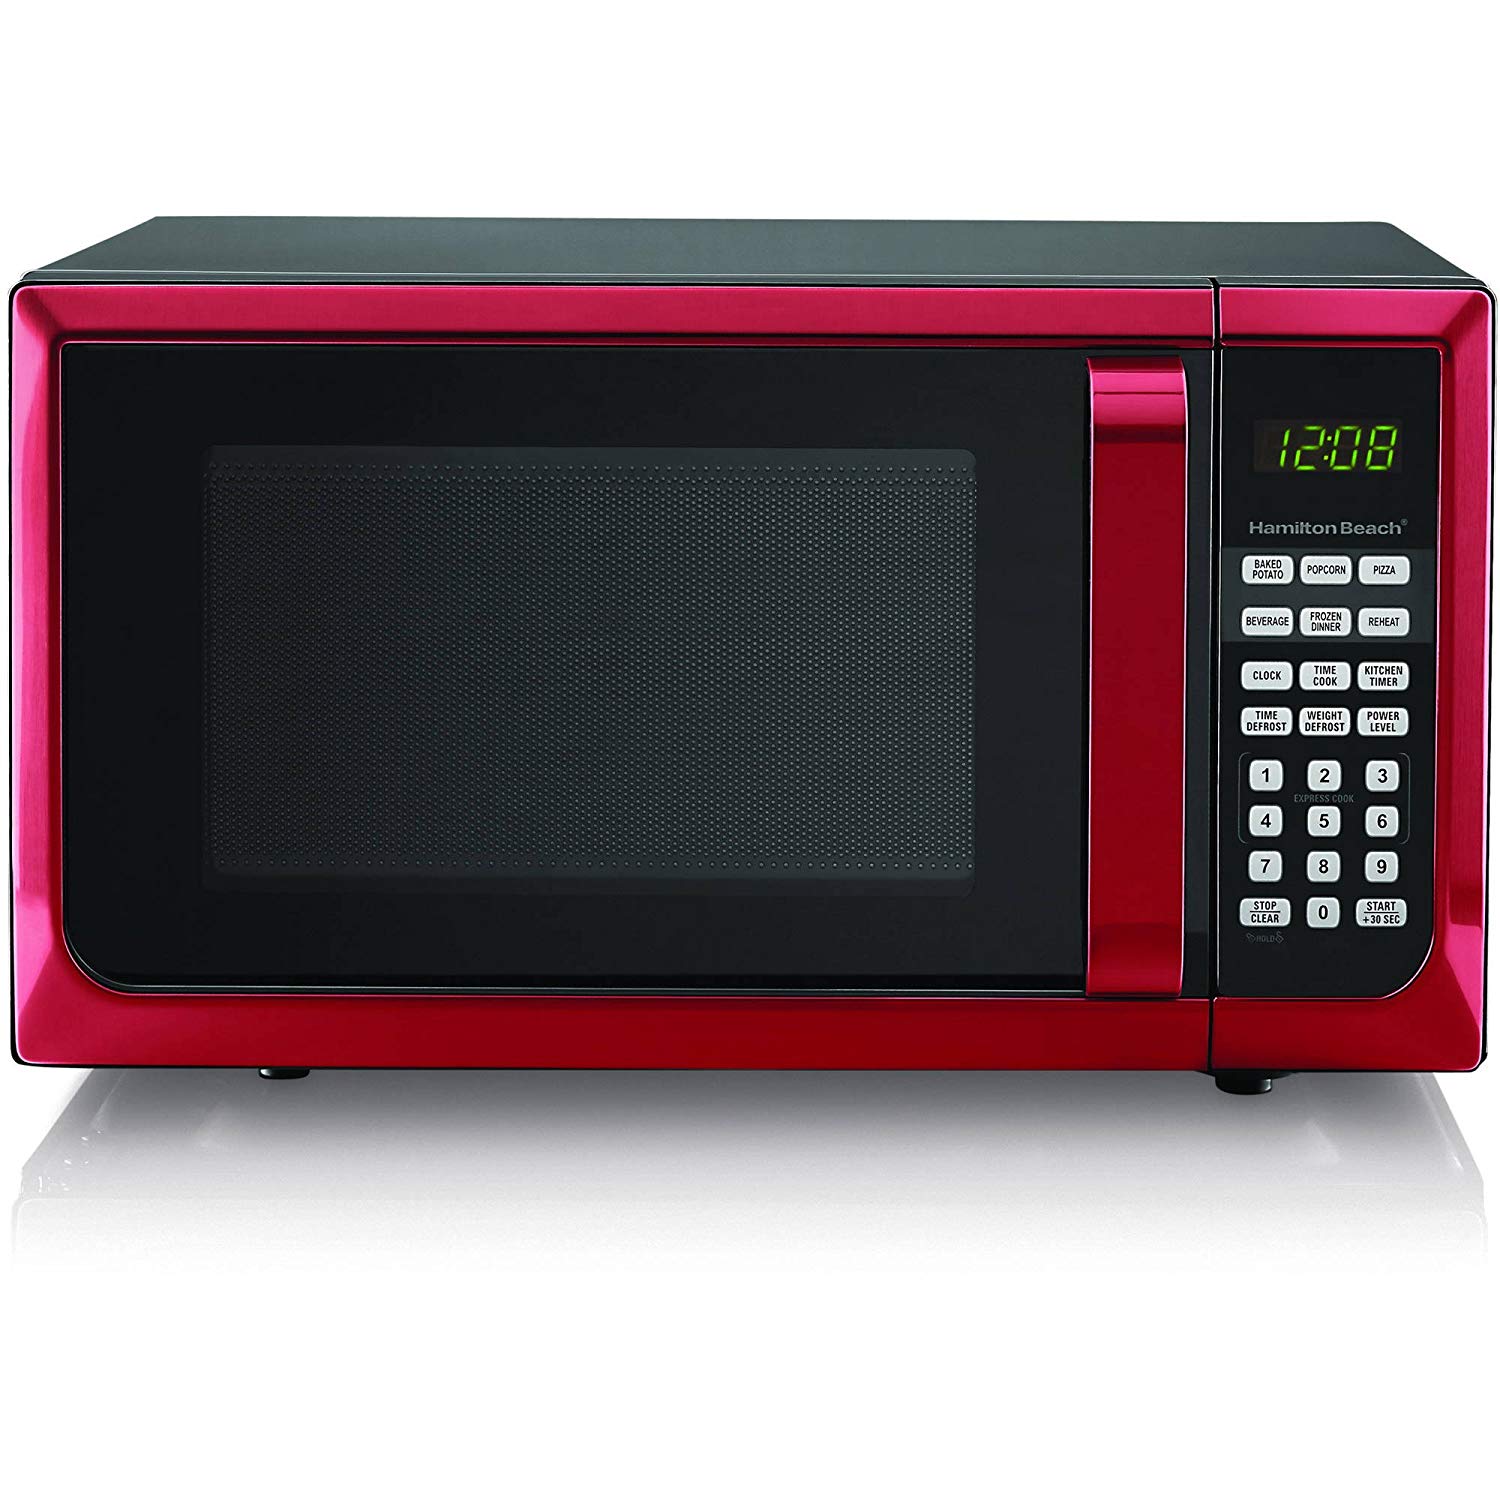 Hamilton Beech .9 cubic foot 900 watt microwave (Red)